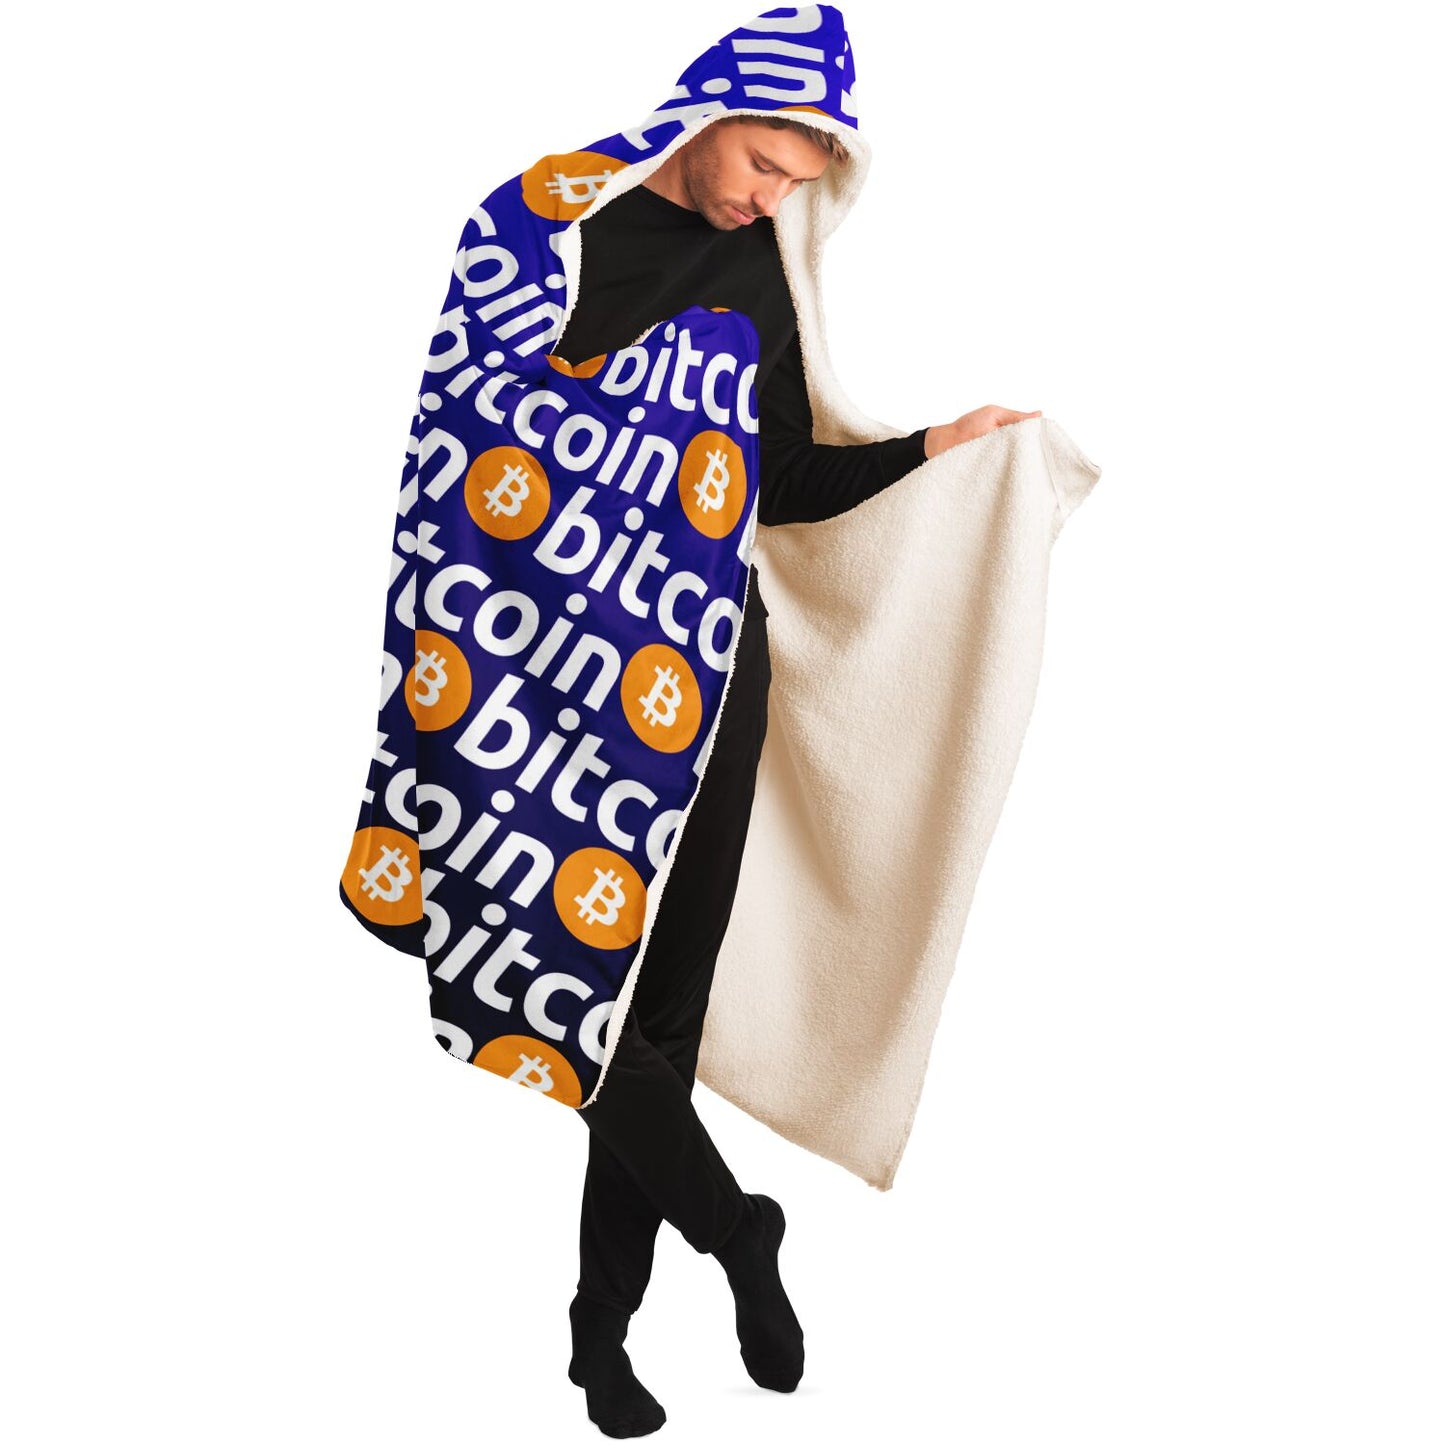 Bitcoin Logo Hooded Blanket